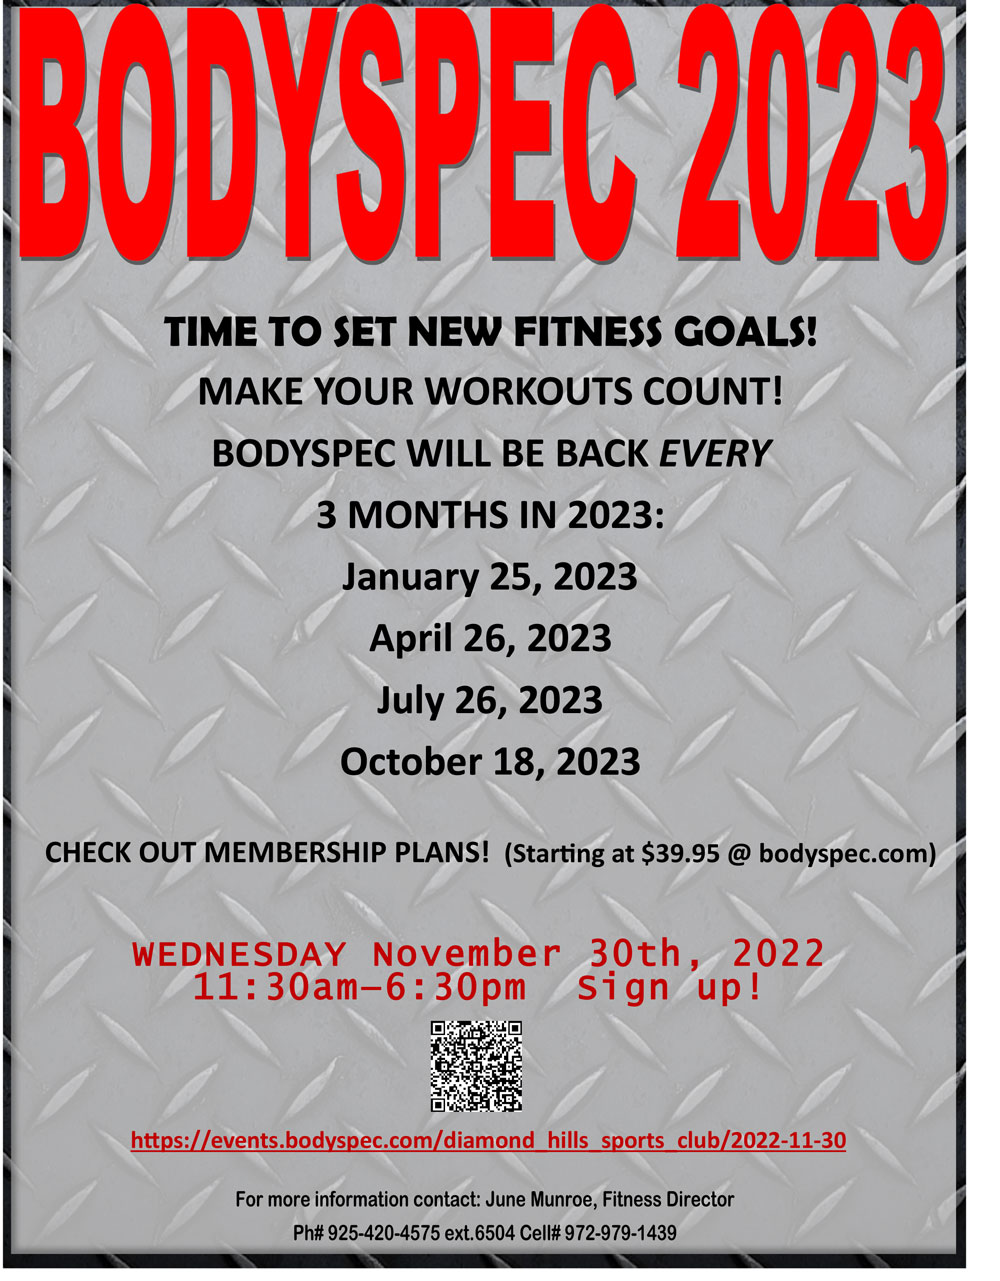 Body Spec New Fitness goals